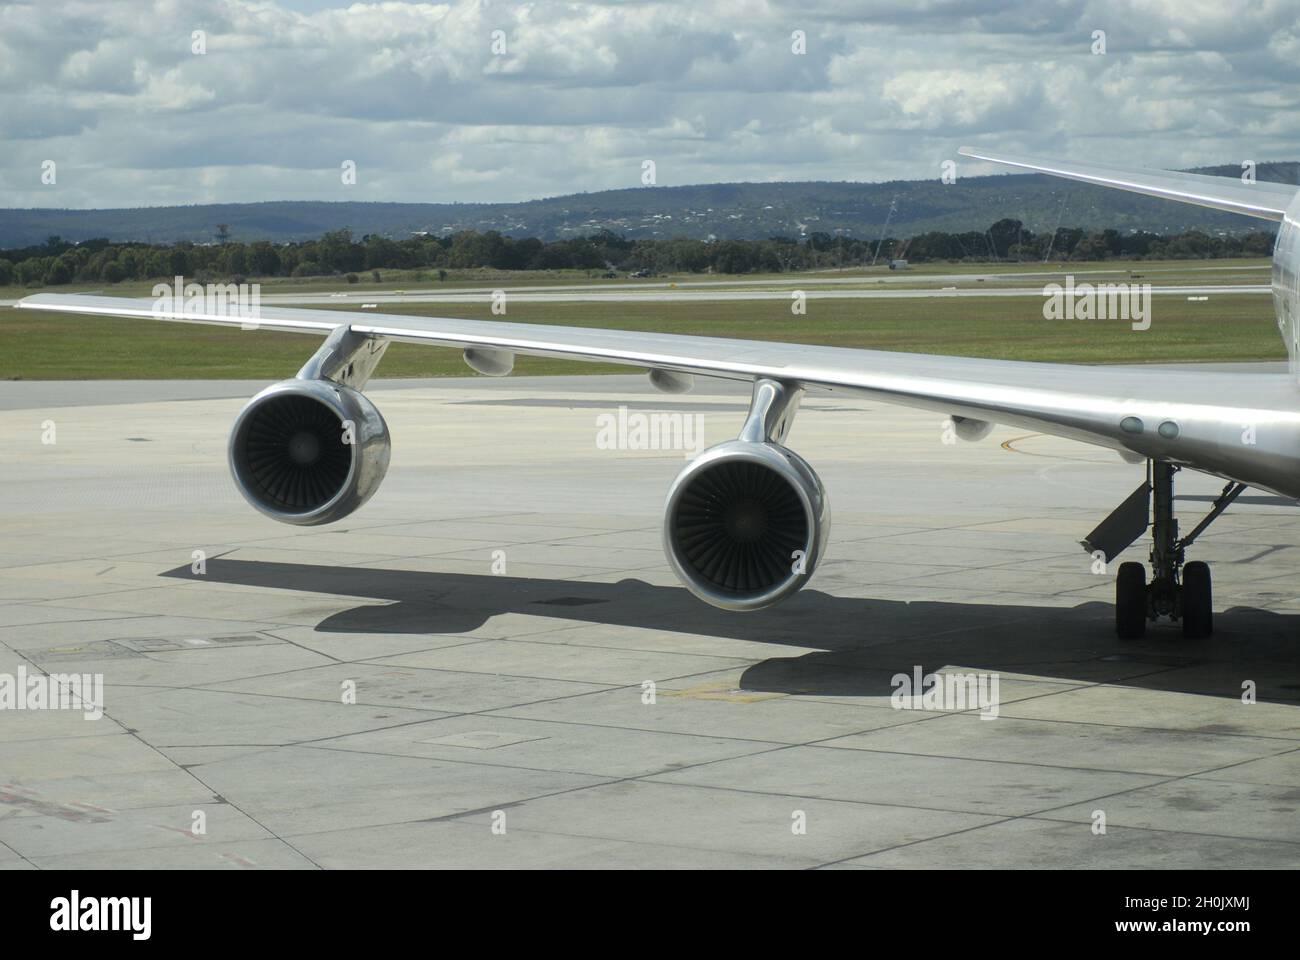 air foil of an airplane at an airport, Australia Stock Photo